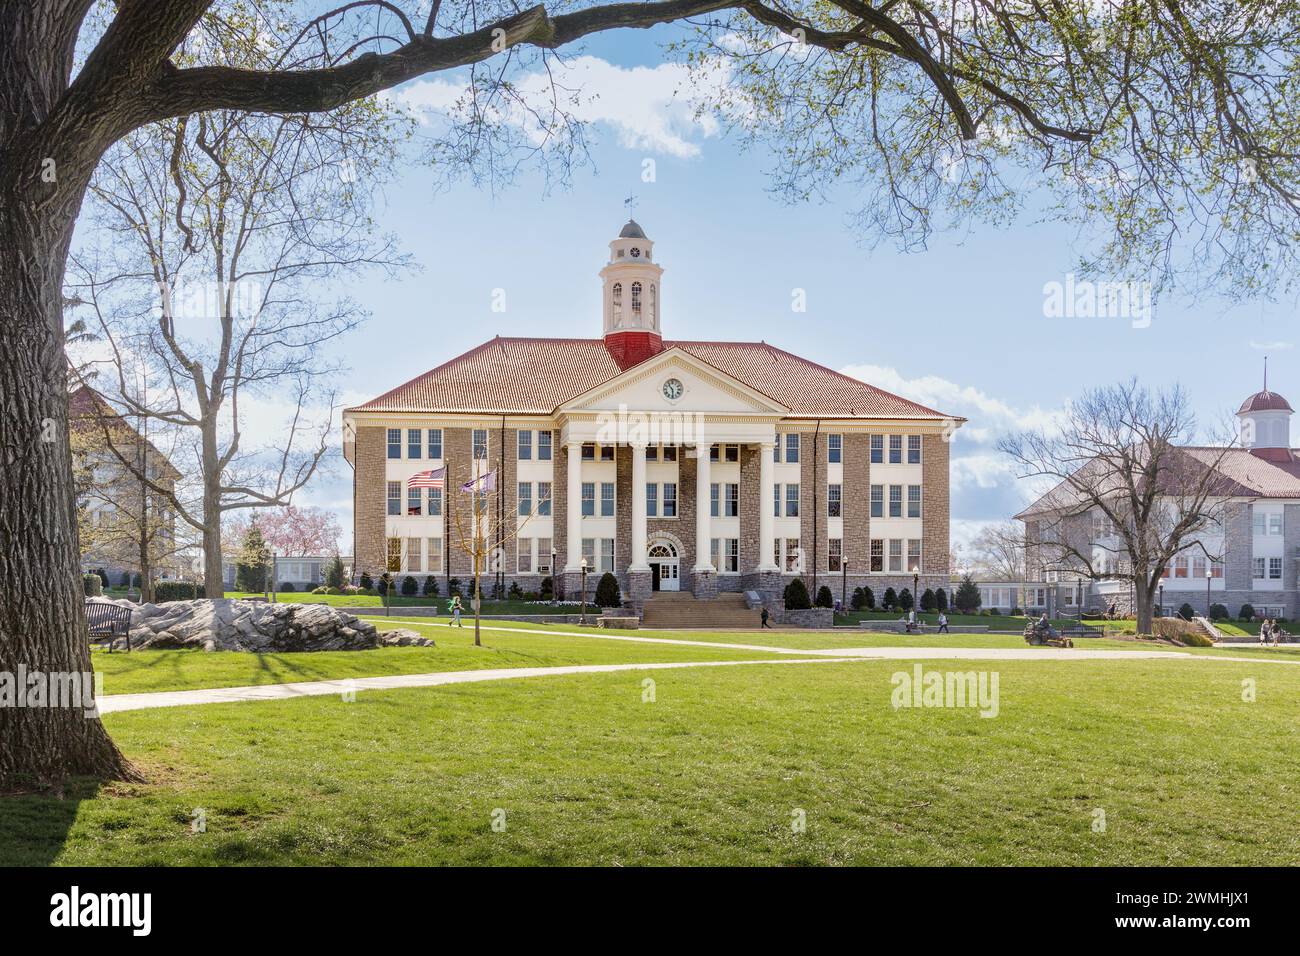 James Madison University, Harrisonburg, vallée de Shenandoah, en Virginie, USA. Banque D'Images